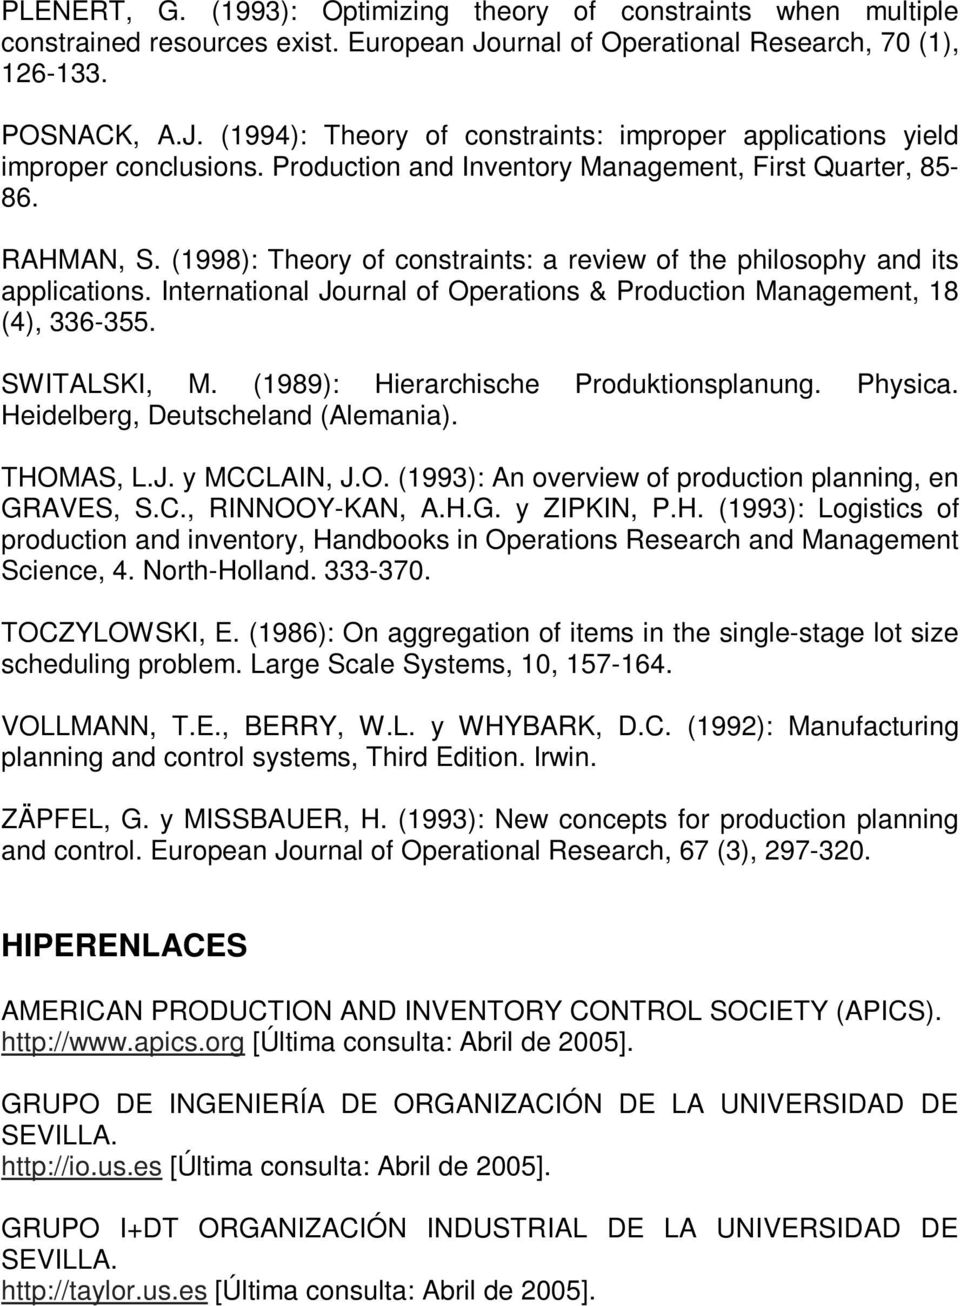 International Journal of Operations & Production Management, 18 (4), 336-355. SWITALSKI, M. (1989): Hierarchische Produktionsplanung. Physica. Heidelberg, Deutscheland (Alemania). THOMAS, L.J. y MCCLAIN, J.